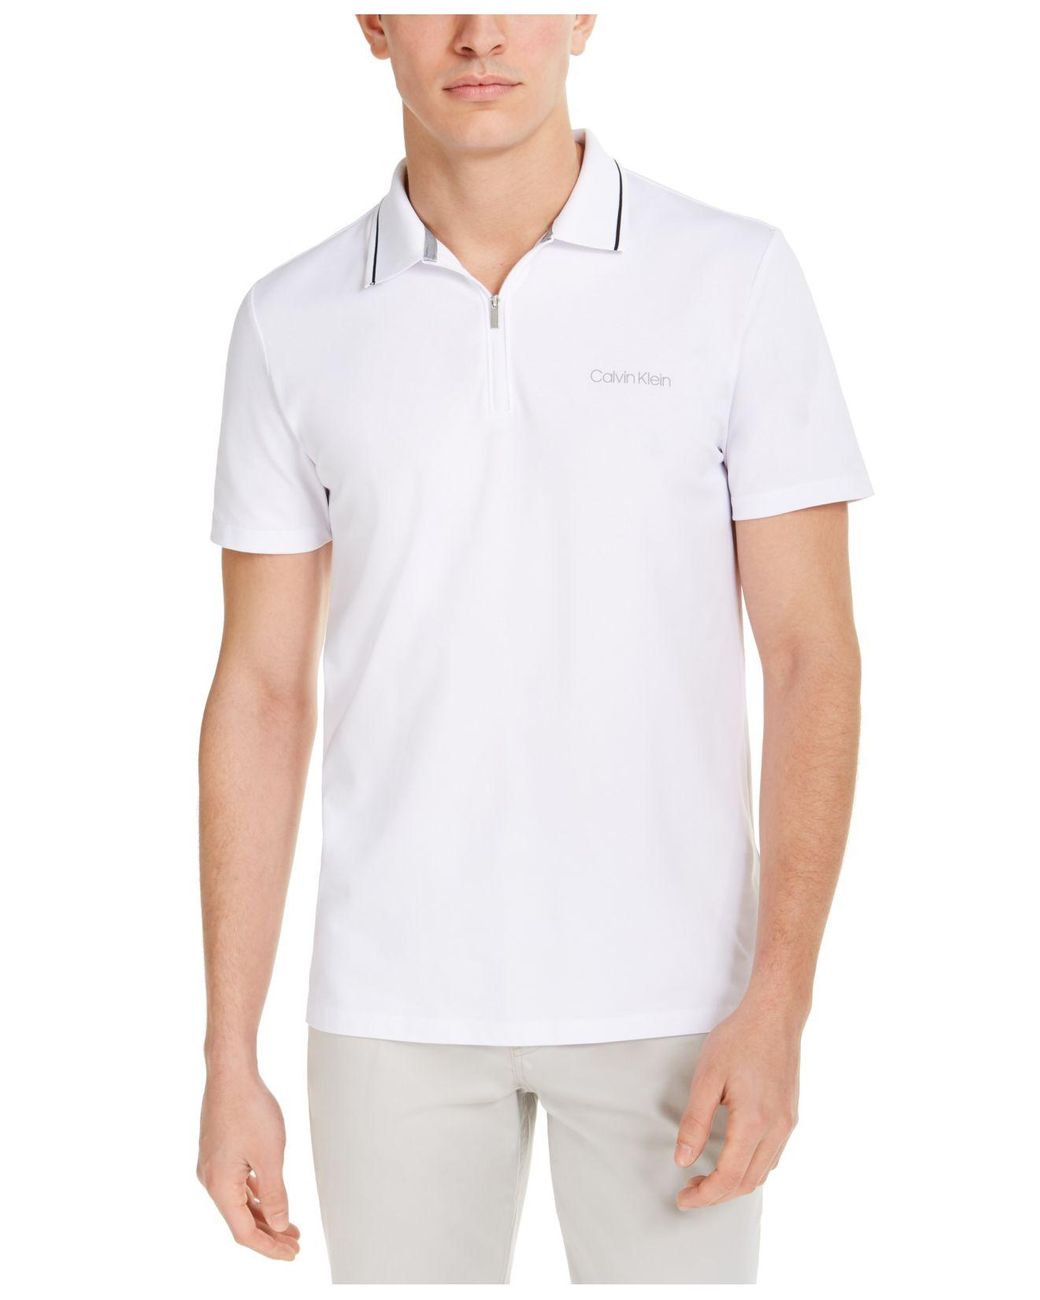 Calvin Klein Cotton Move 365 Zip Polo Shirt in White for Men - Lyst